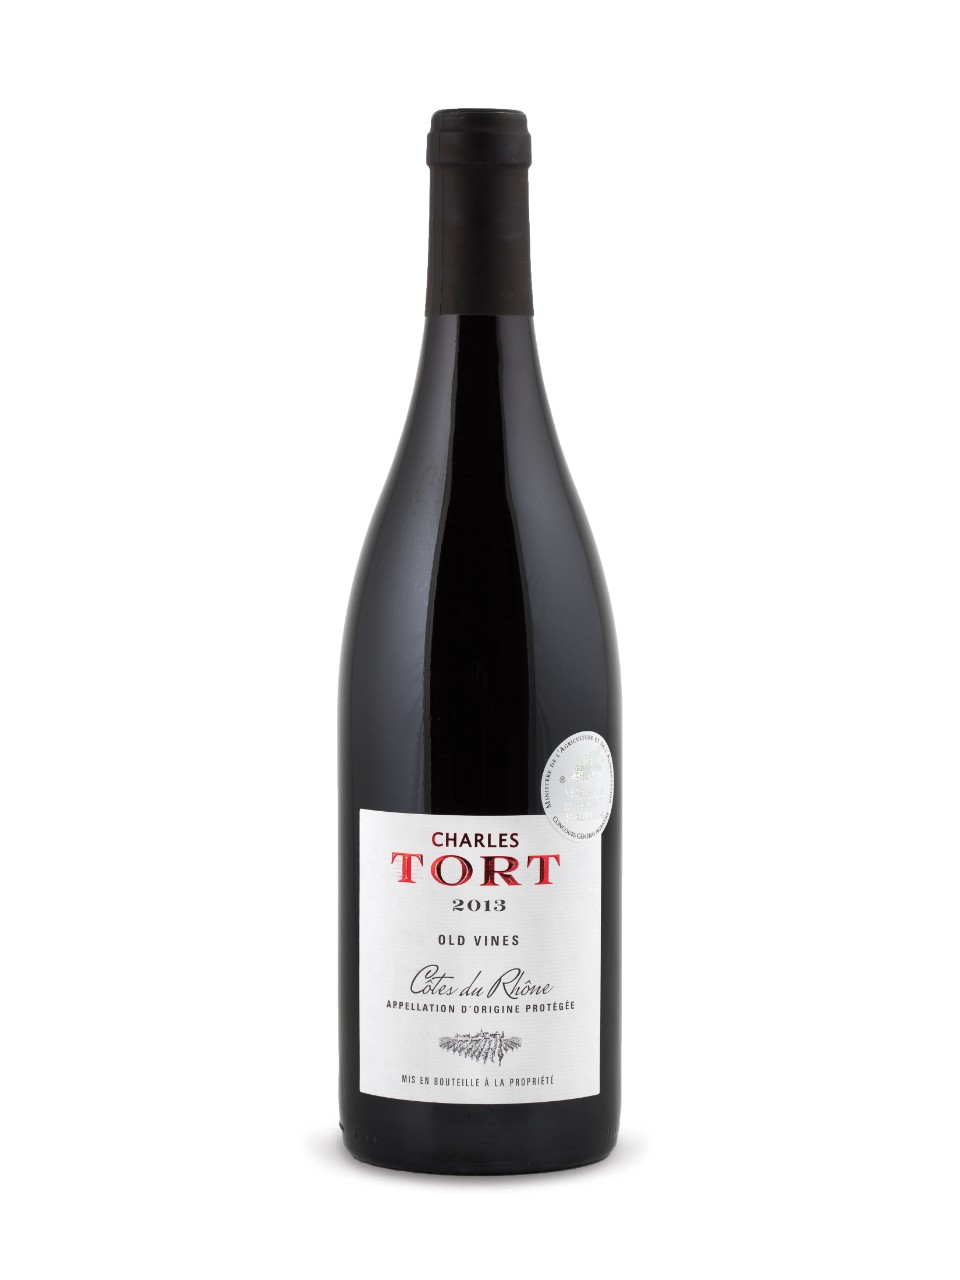 Charles Tort Old Vines Cotes Du Rhone AOC